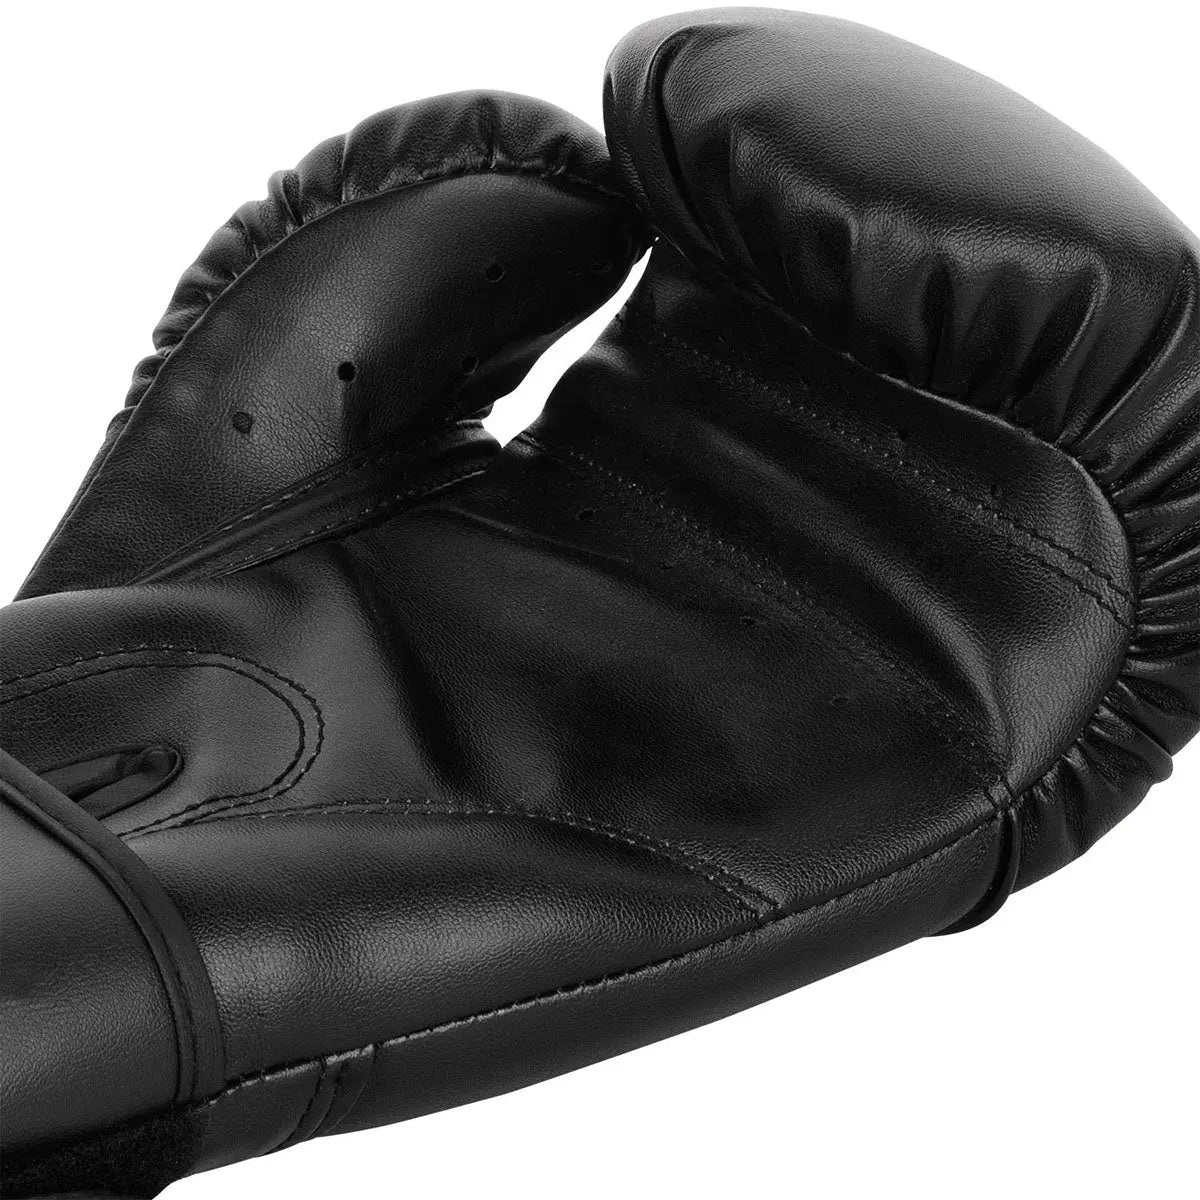 Venum Contender Boxing Gloves - Black/Red 10 oz